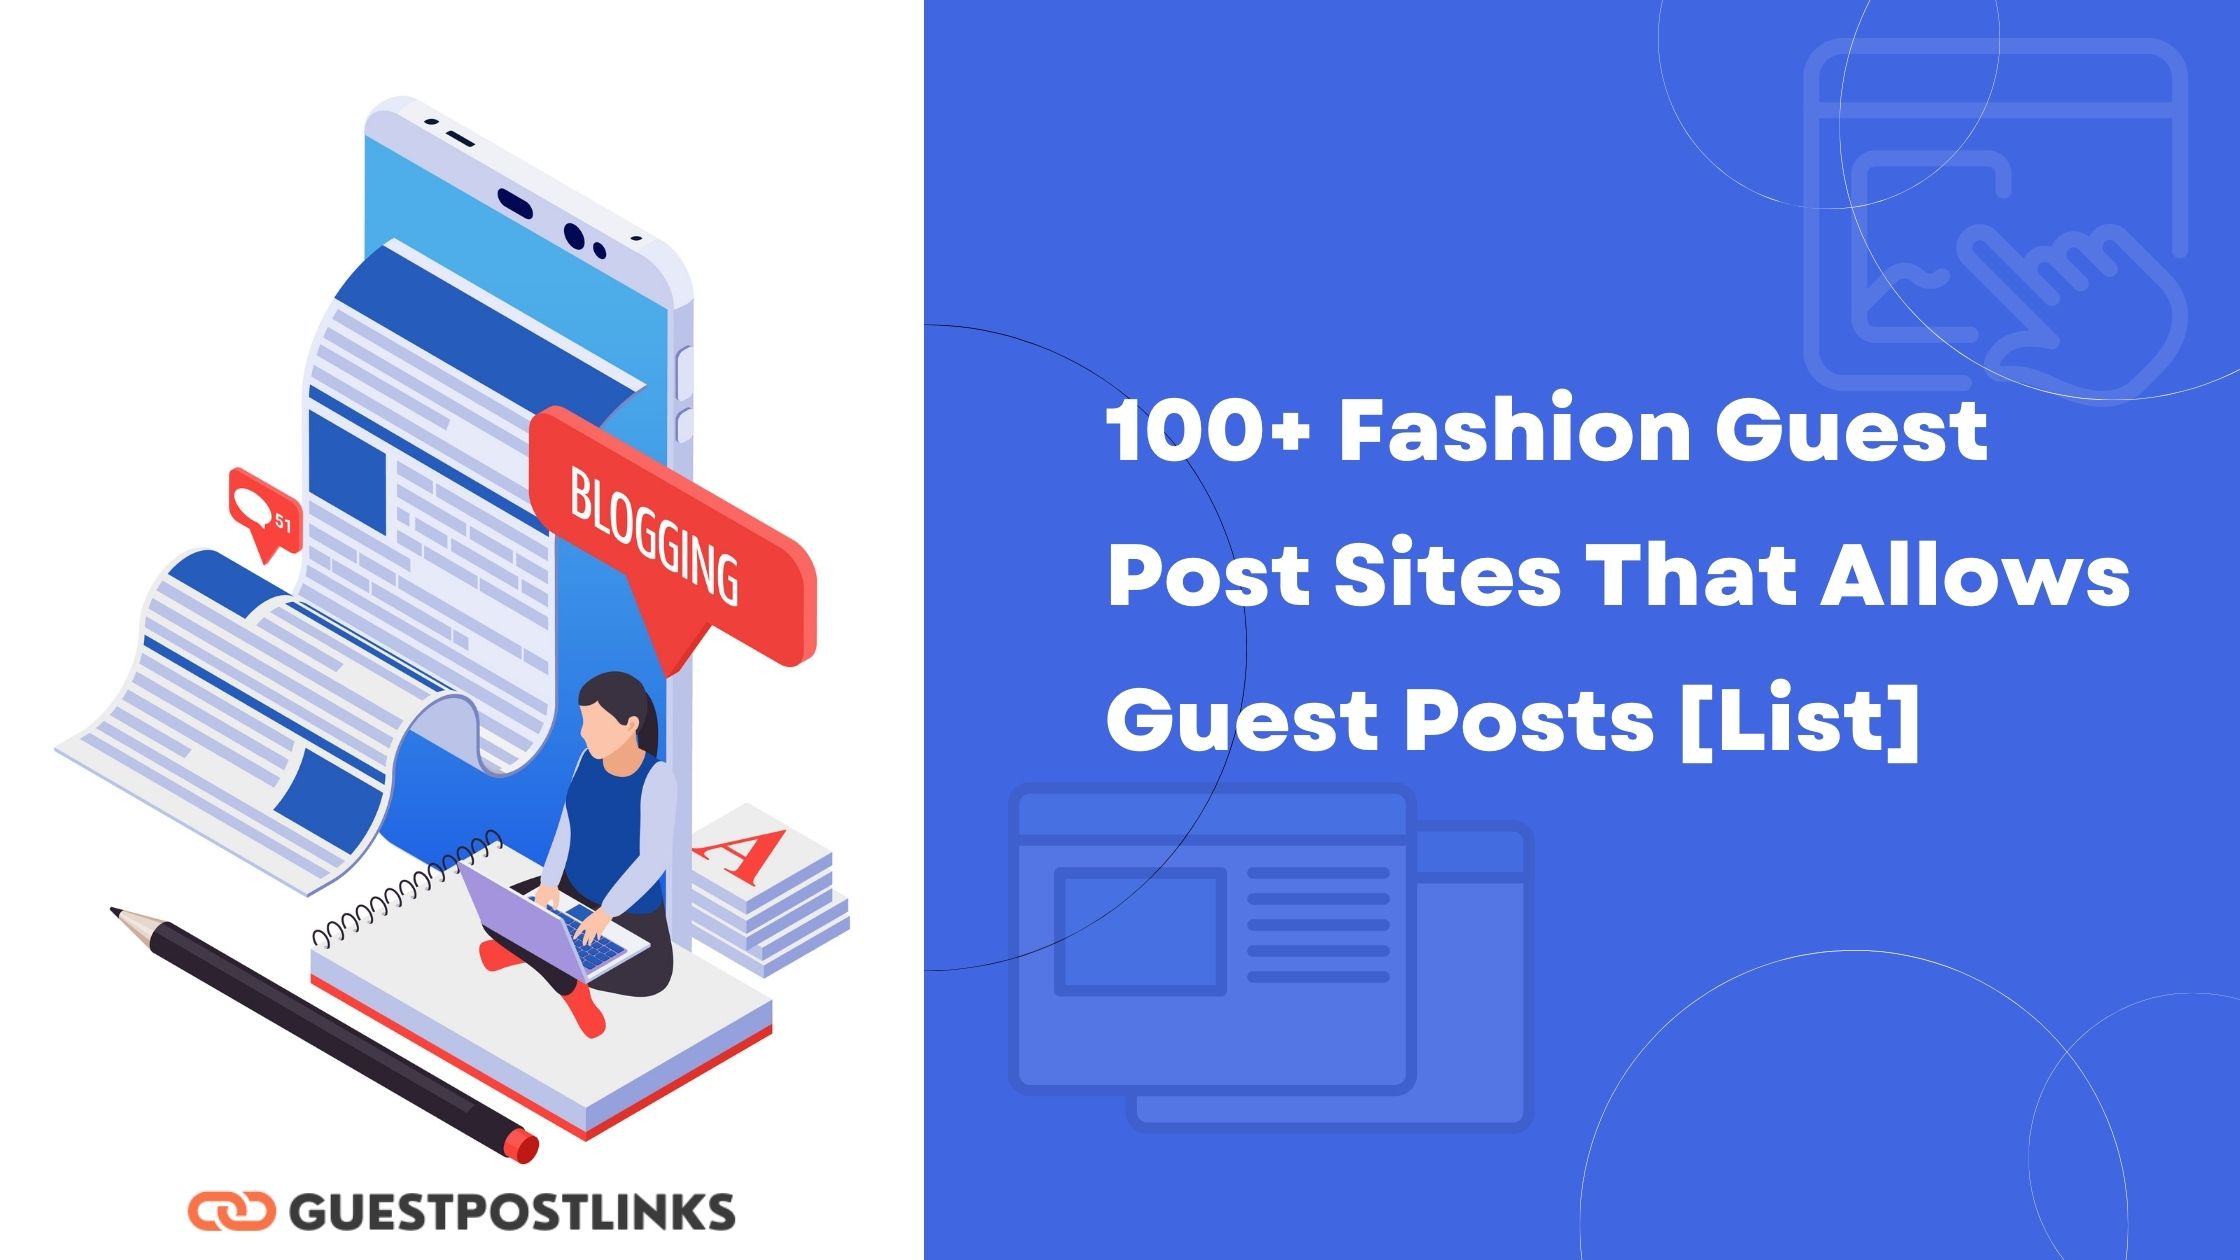 100+ Fashion Guest Post Sites That Allows Guest Posts [List]